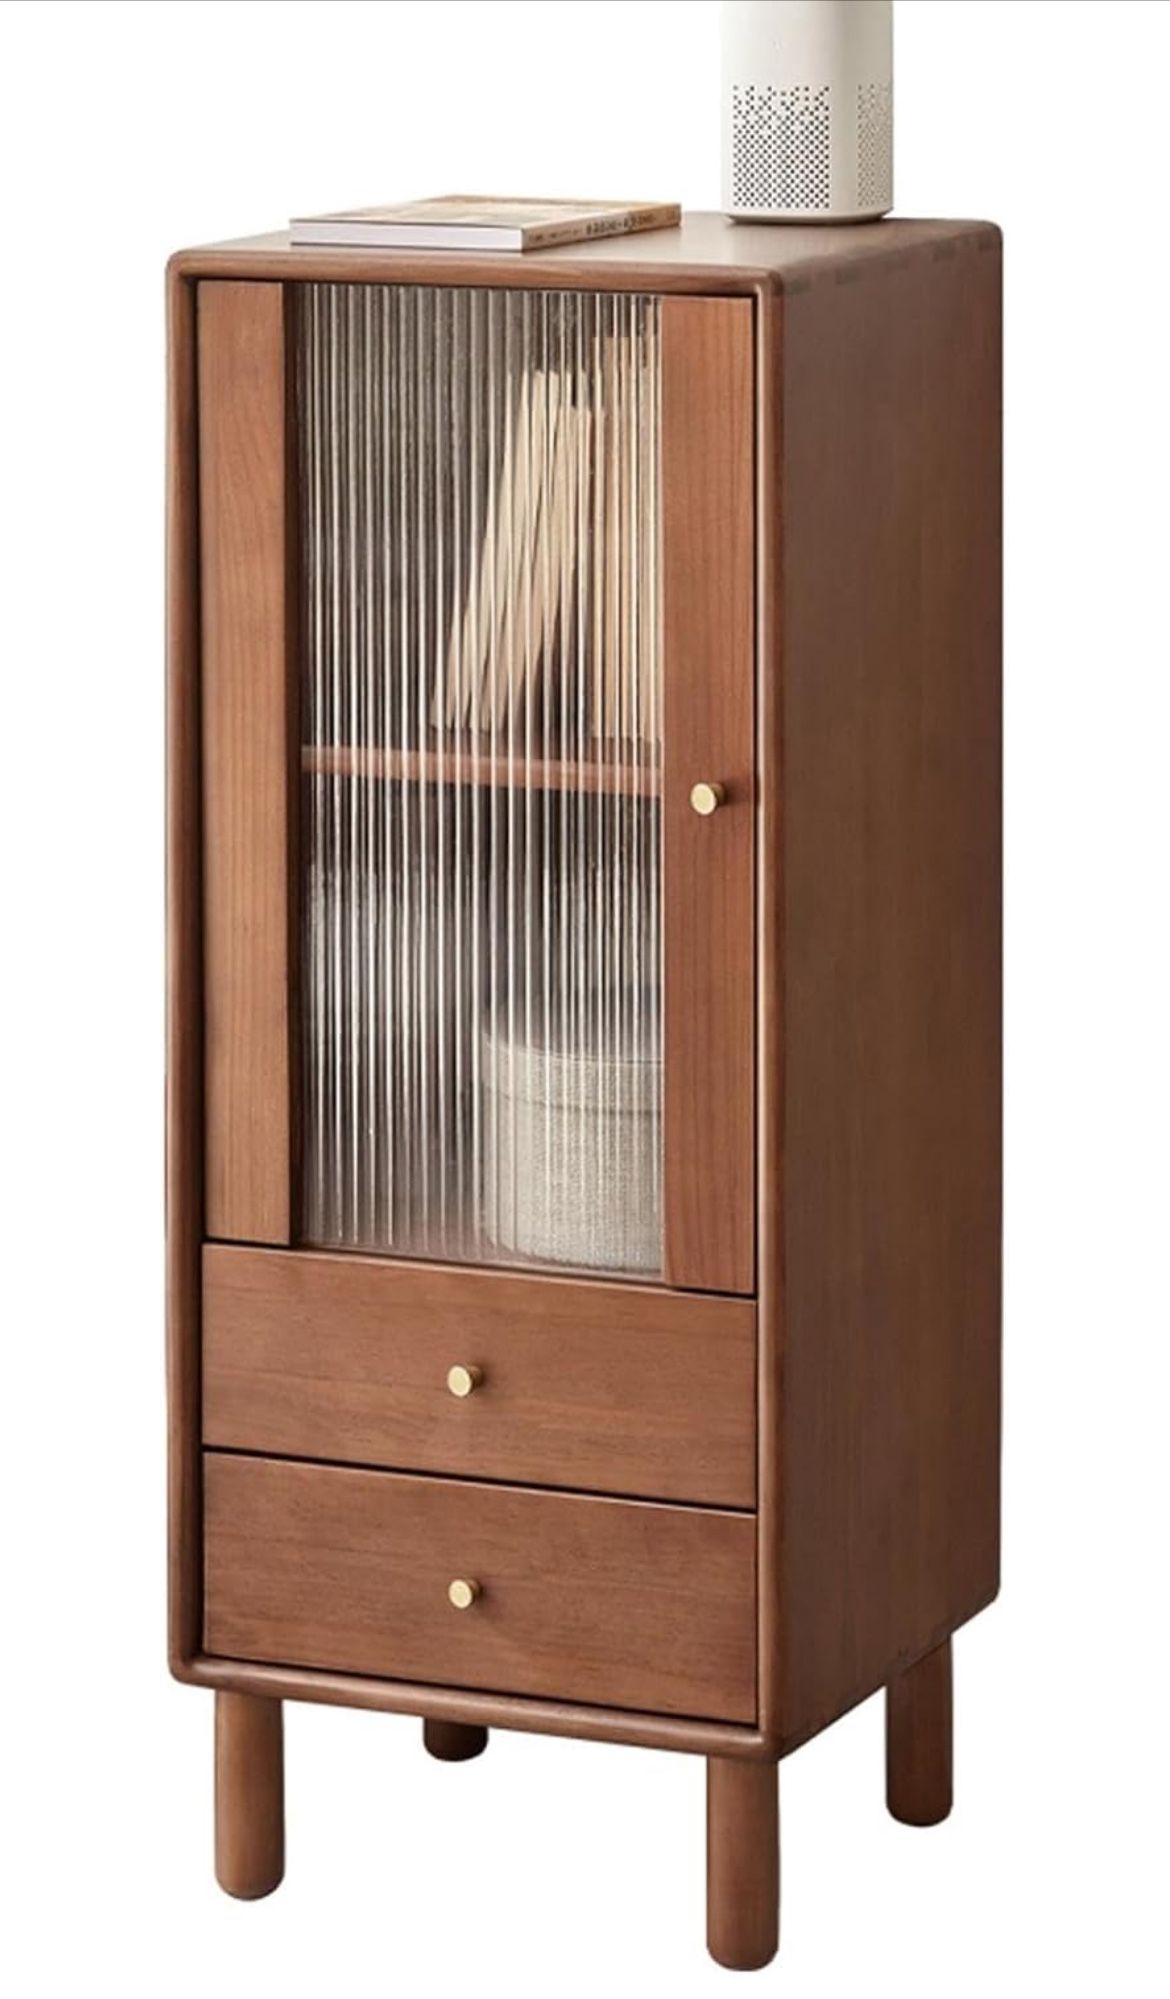 100% Solid Oak Wood Storage Cabinet with Drawers & Door-Floor Cabinet,Accent Cupboard-Versatile Sideboard for Living Room, Entryway, Kitchen-37.4IN,Wa